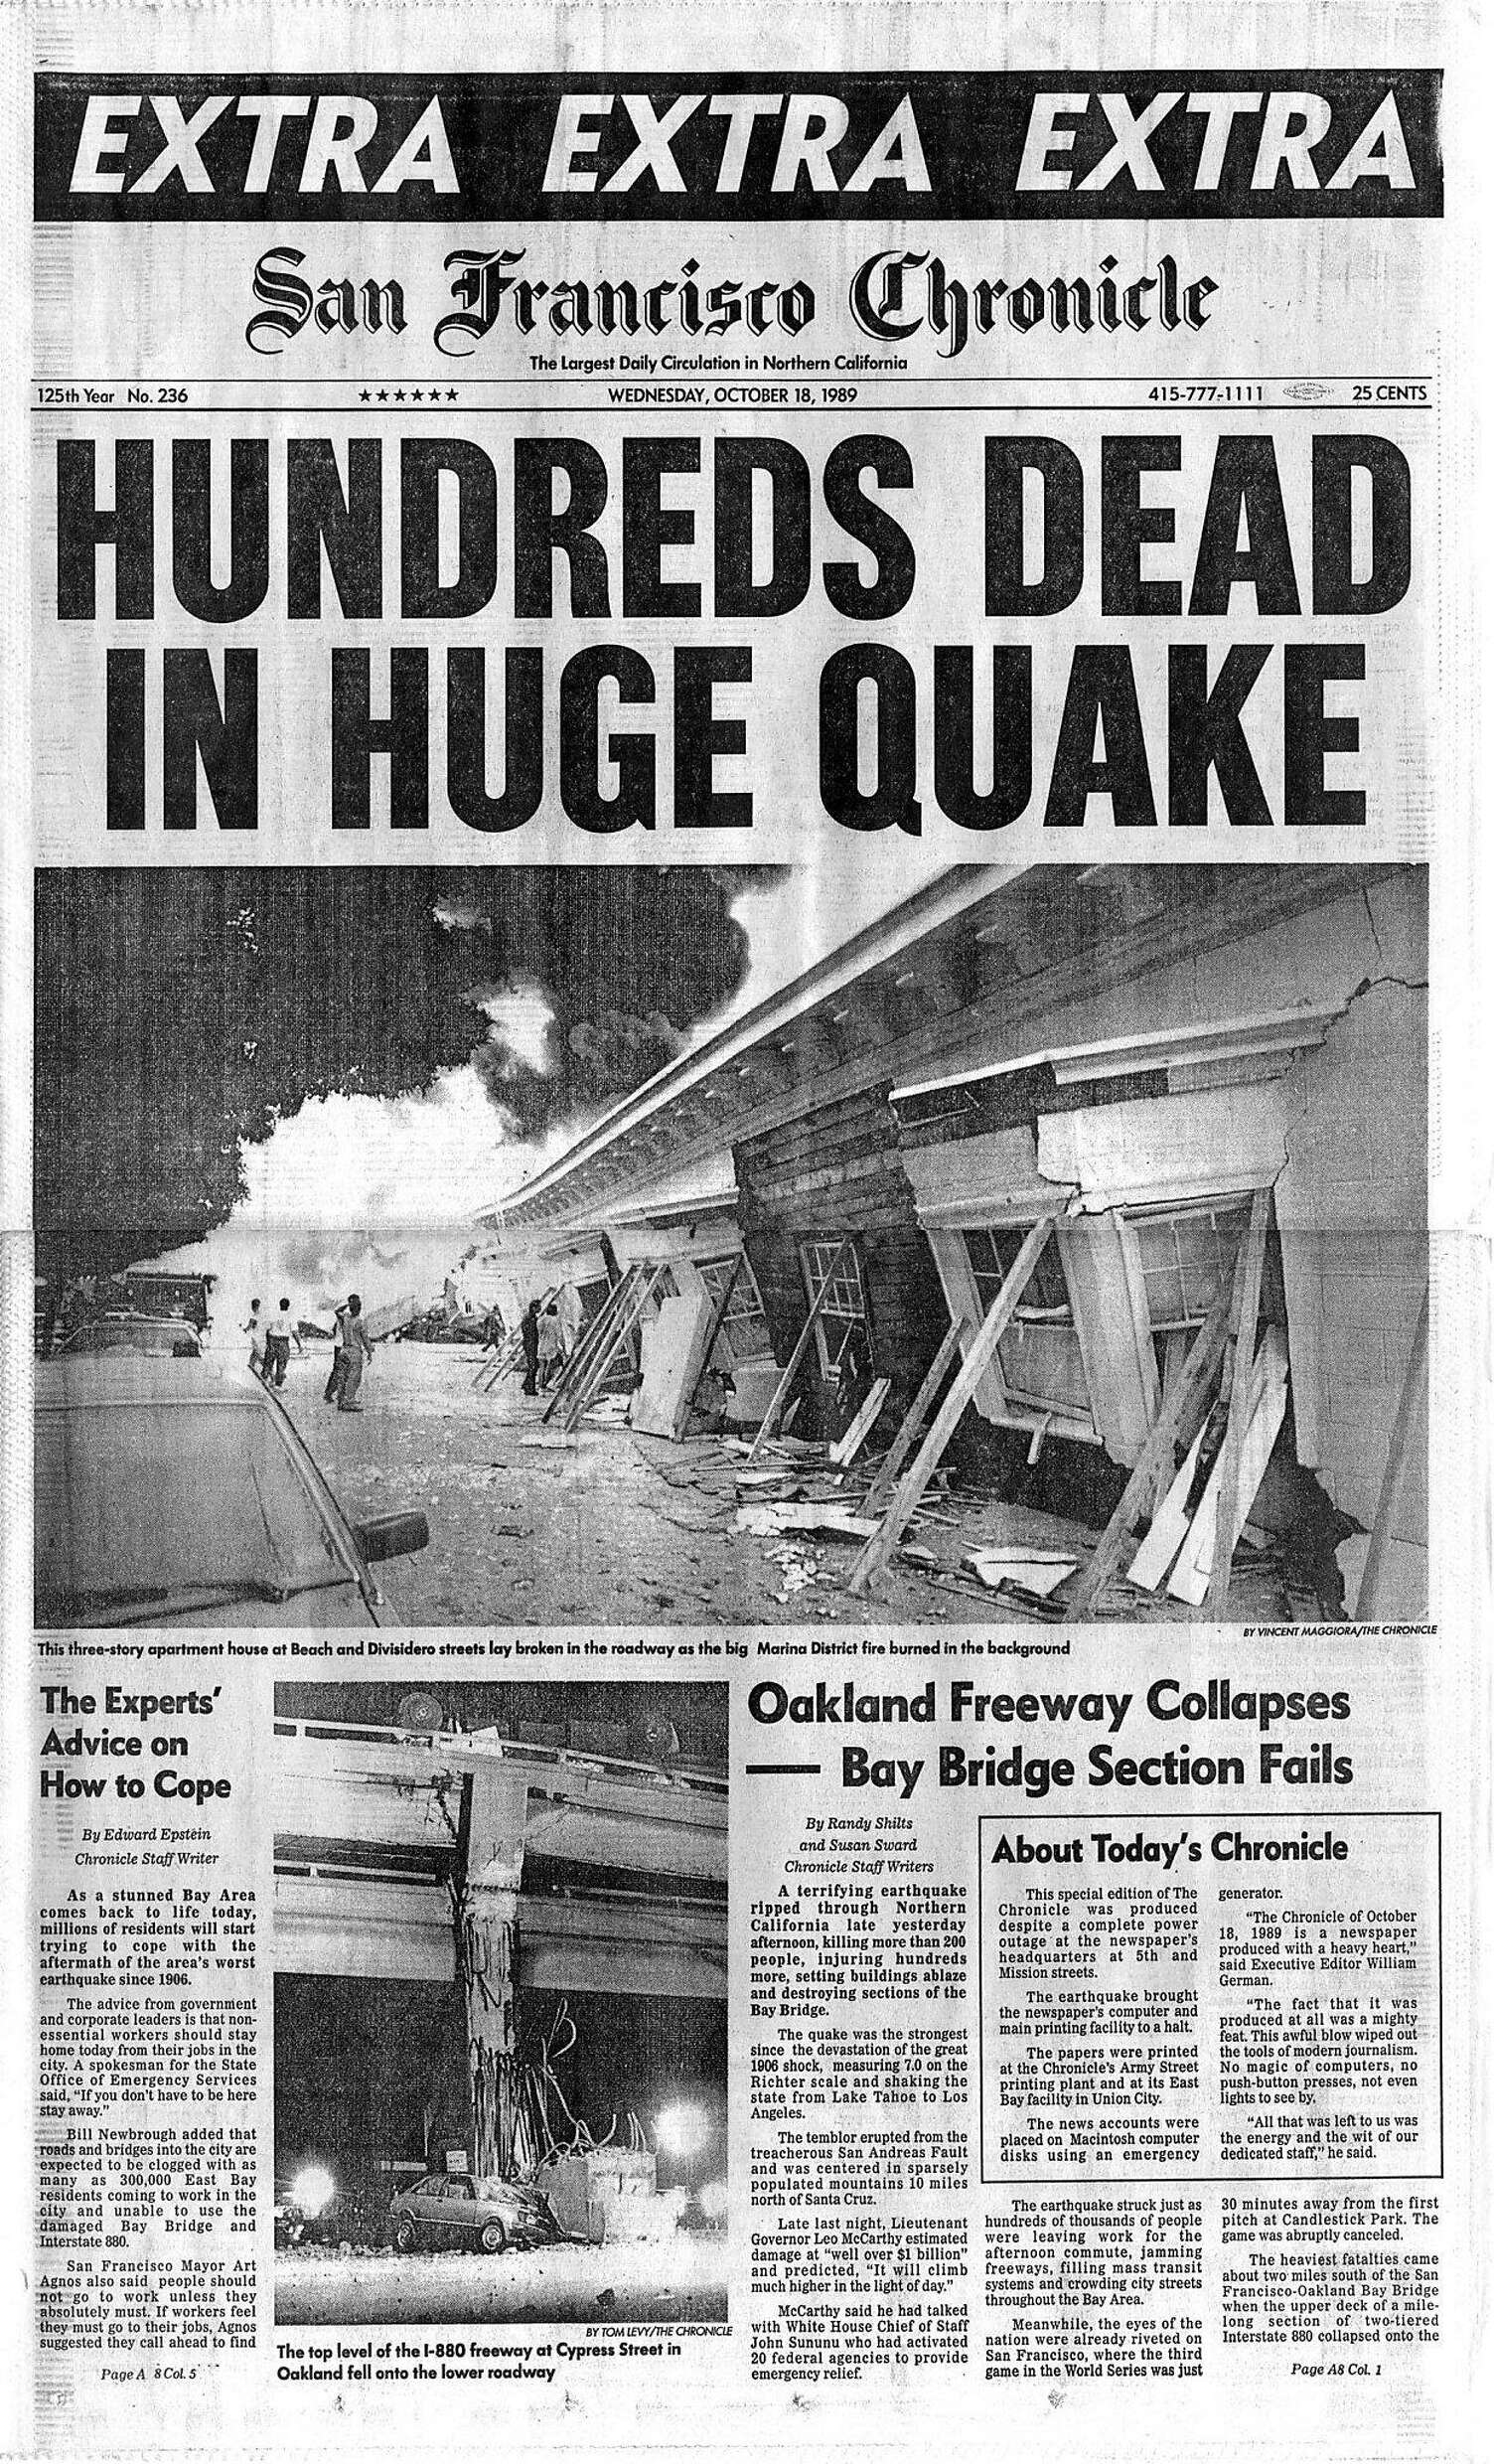 Chronicle Covers: When the Loma Prieta quake transformed the Bay Area